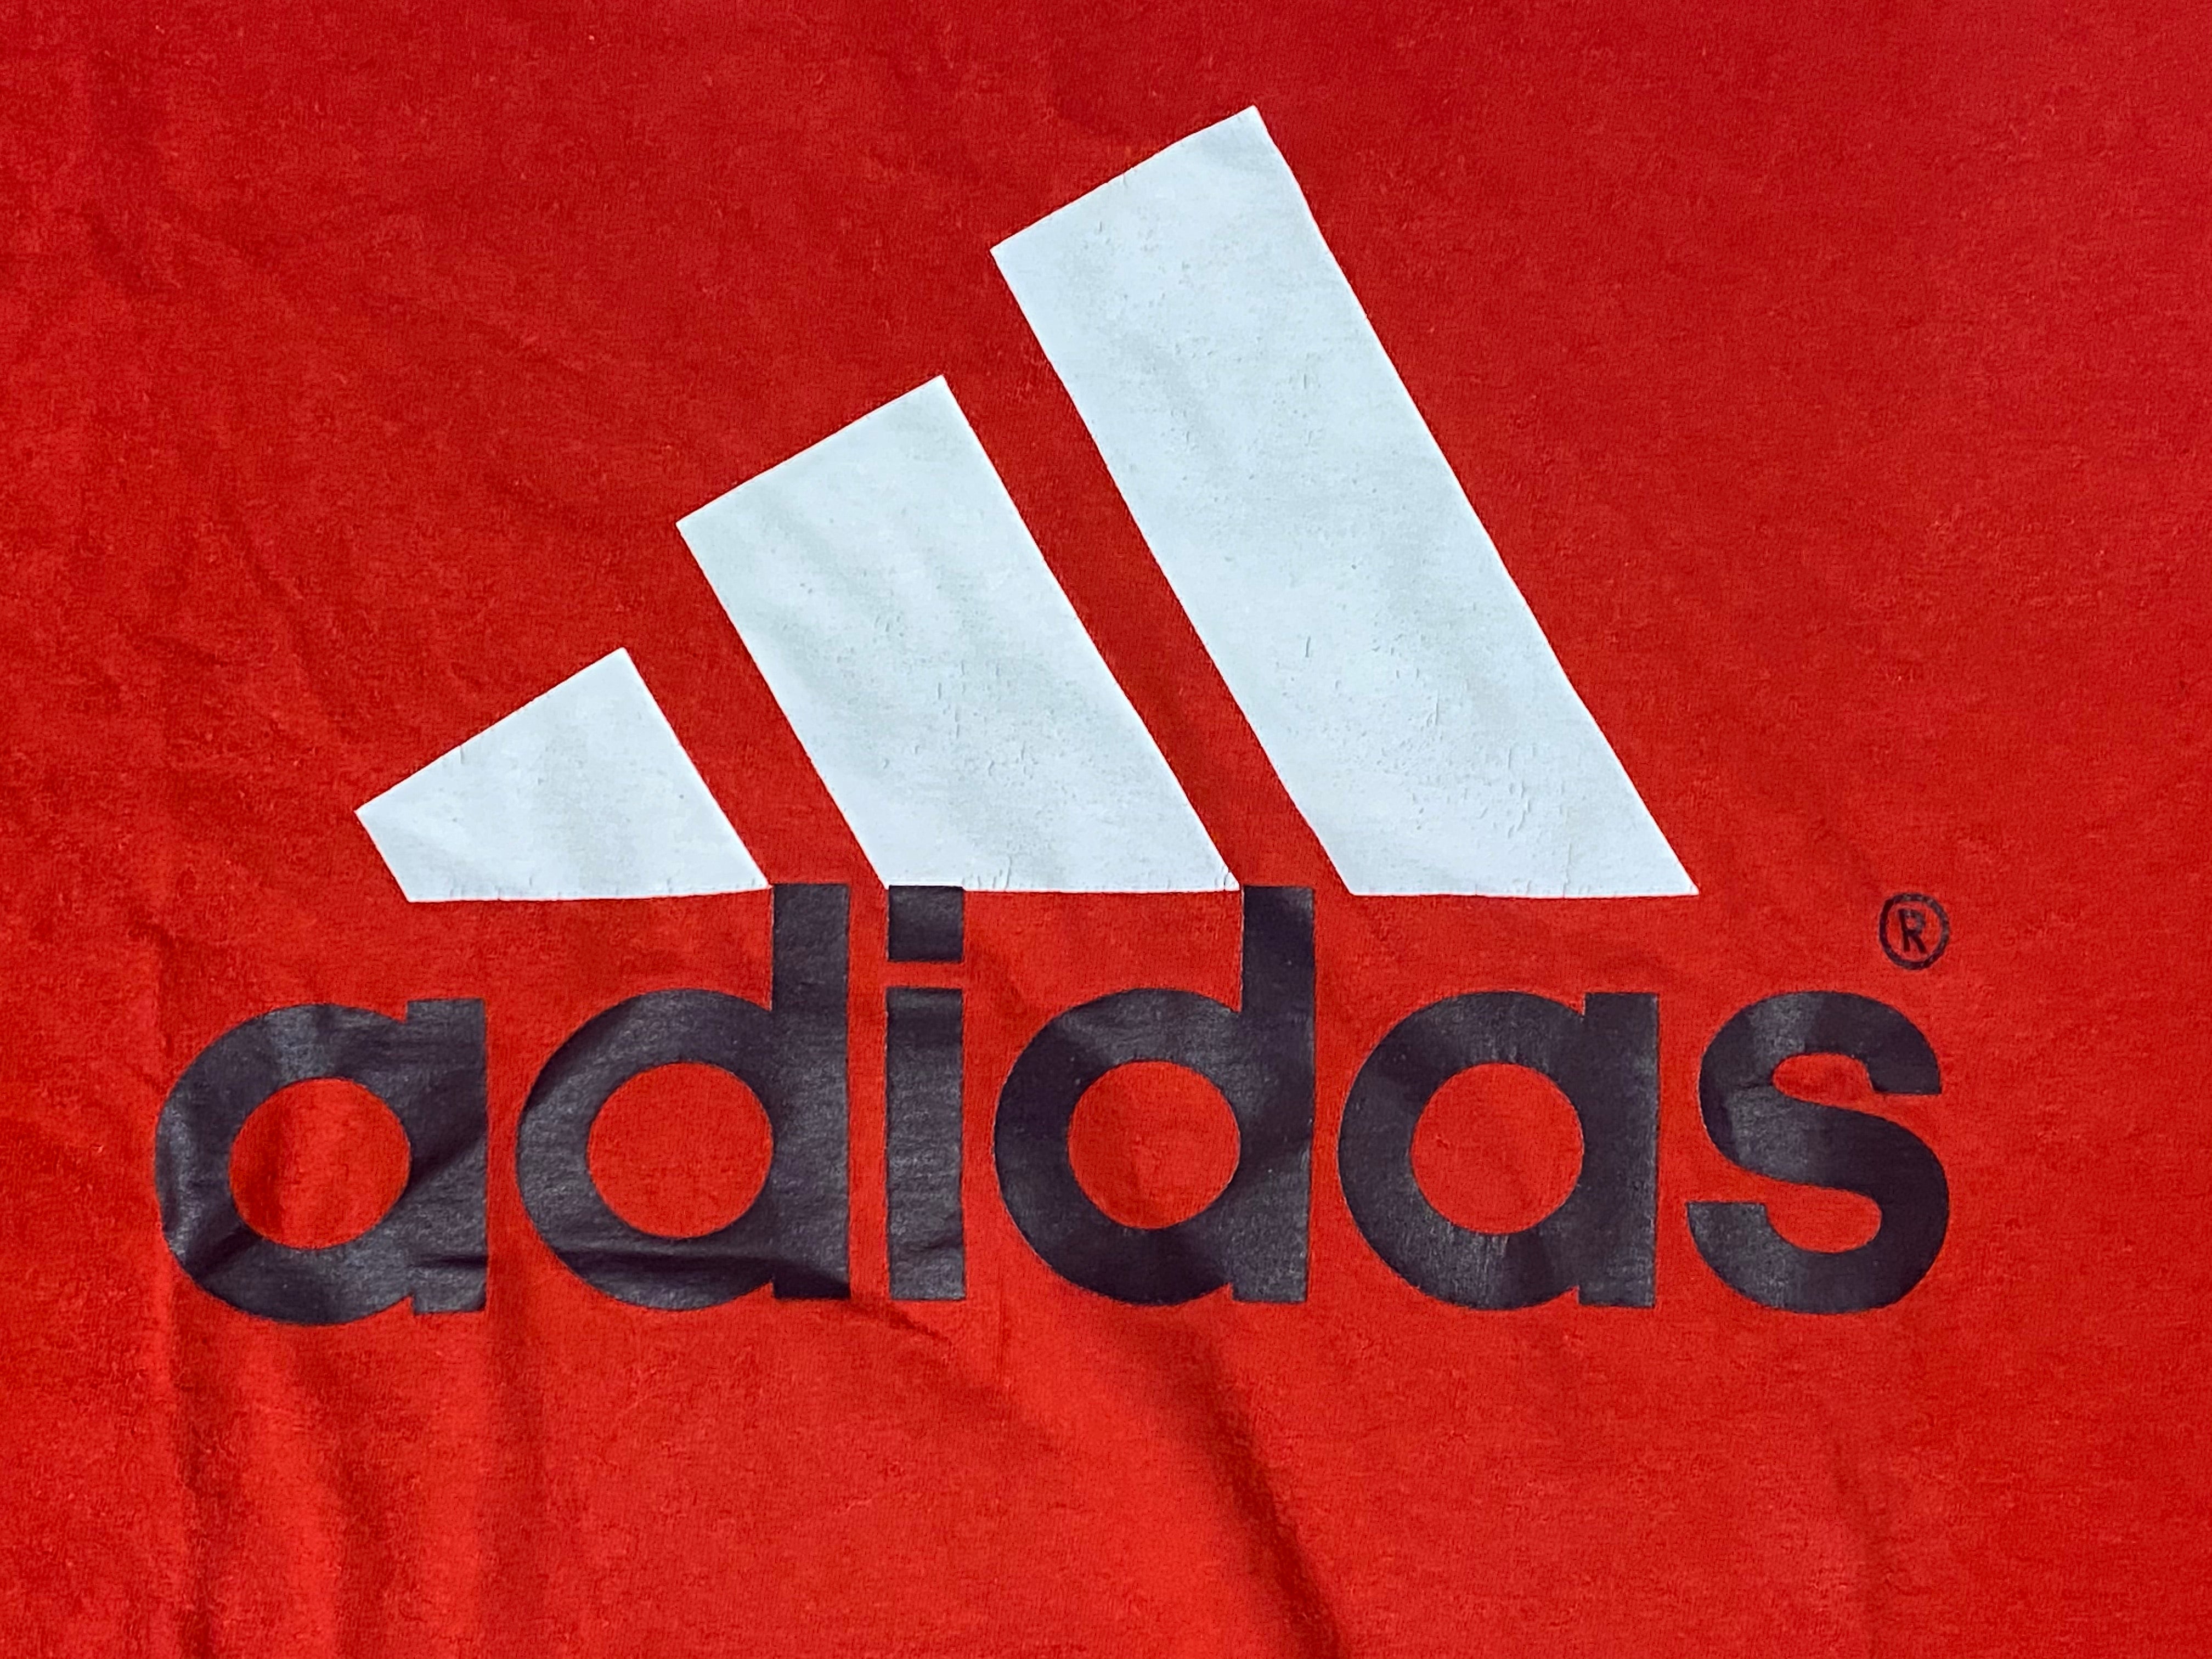 Adidas Logo T shirt - Red